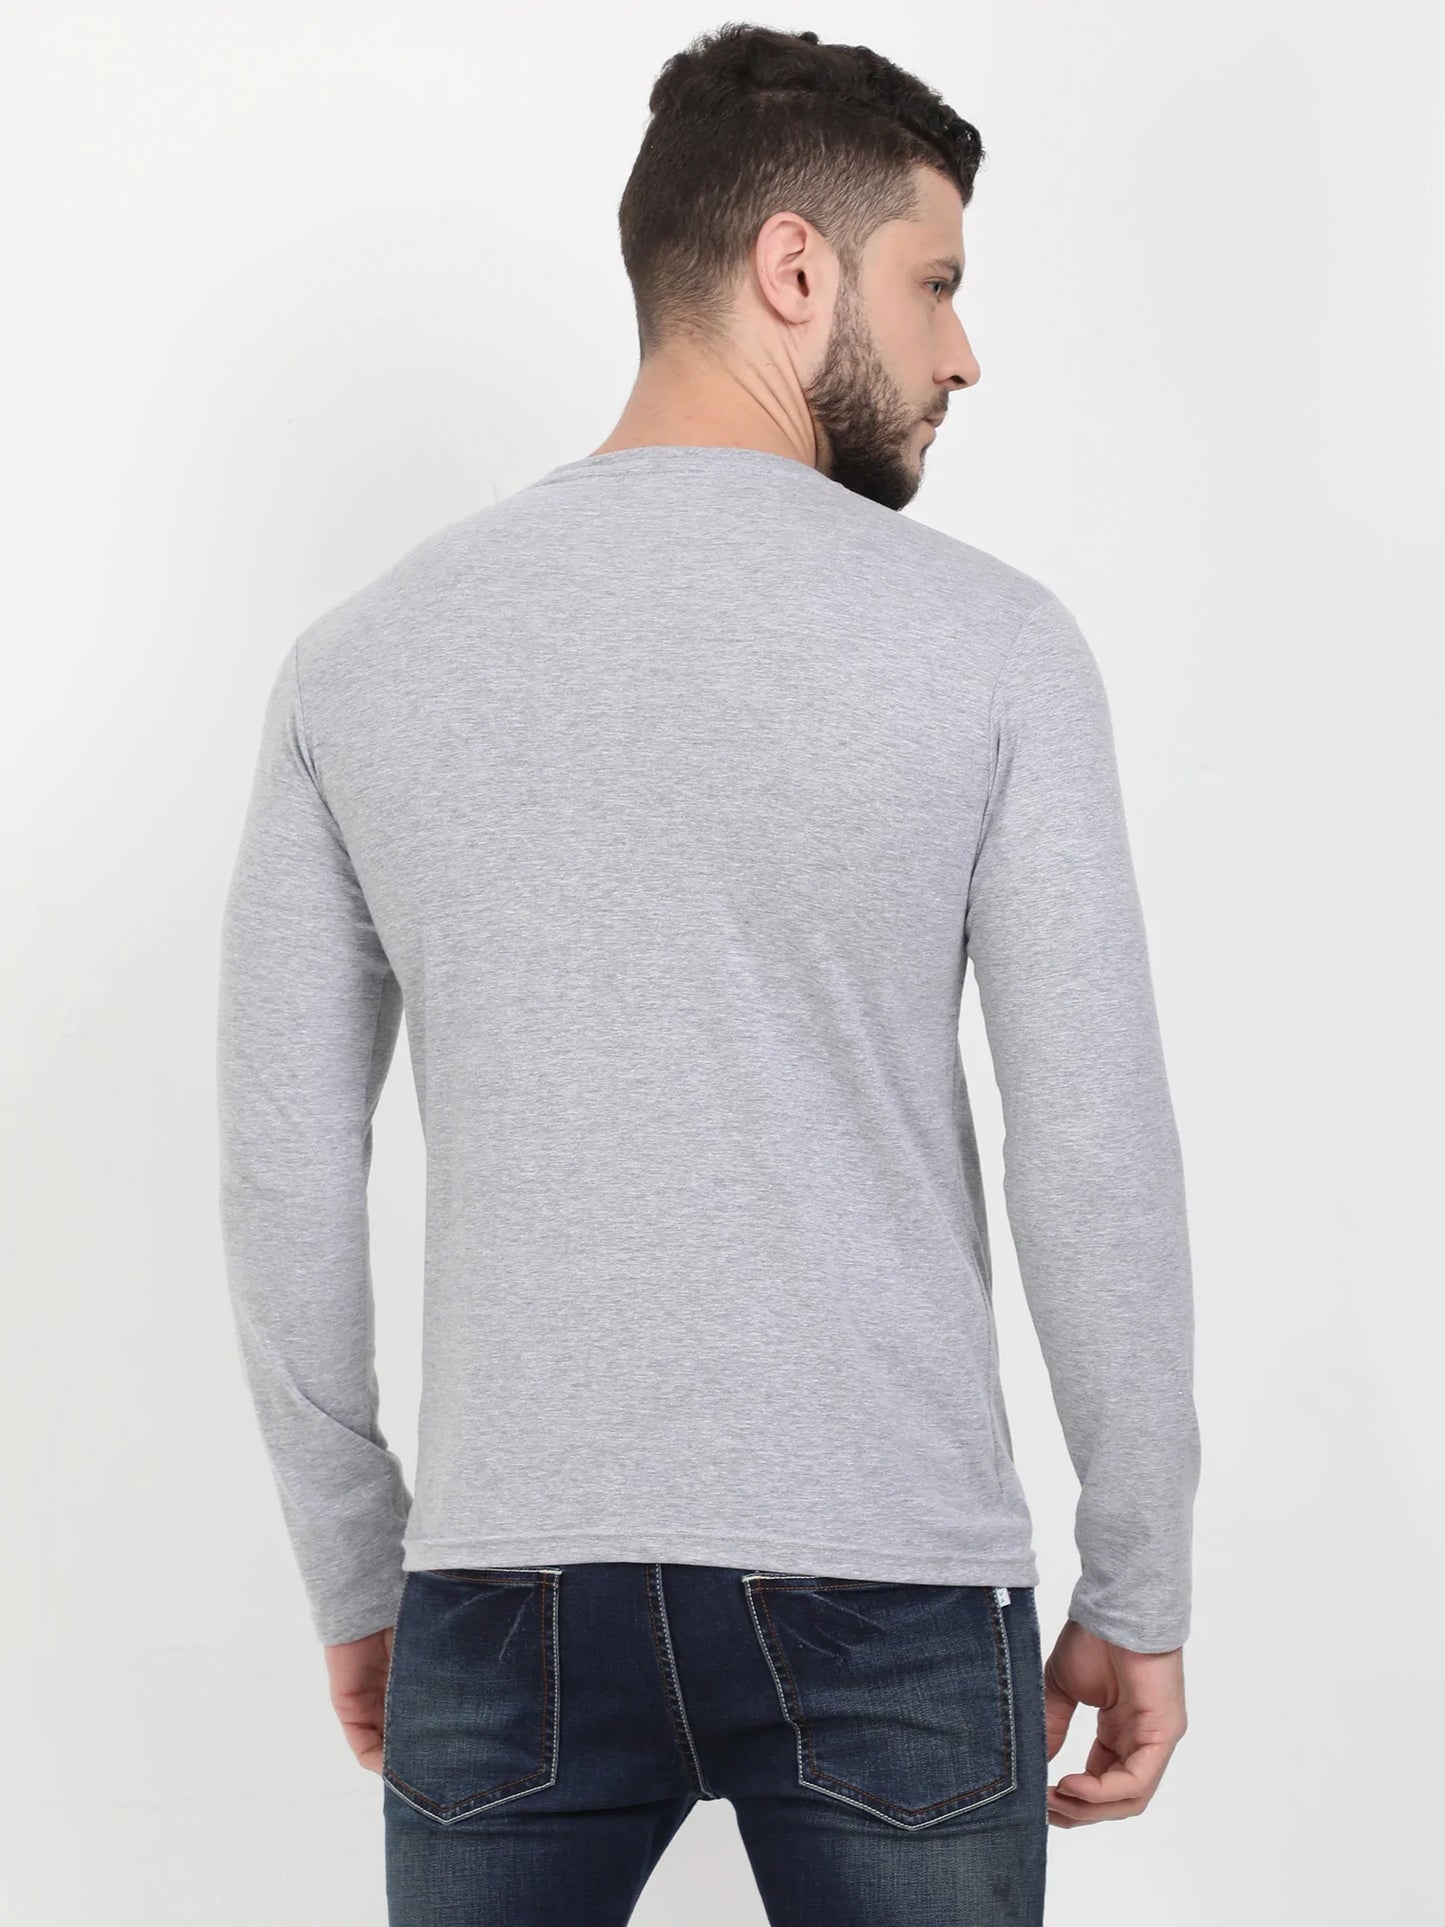 Men's Cotton Plain Round Neck Full Sleeve T-Shirt